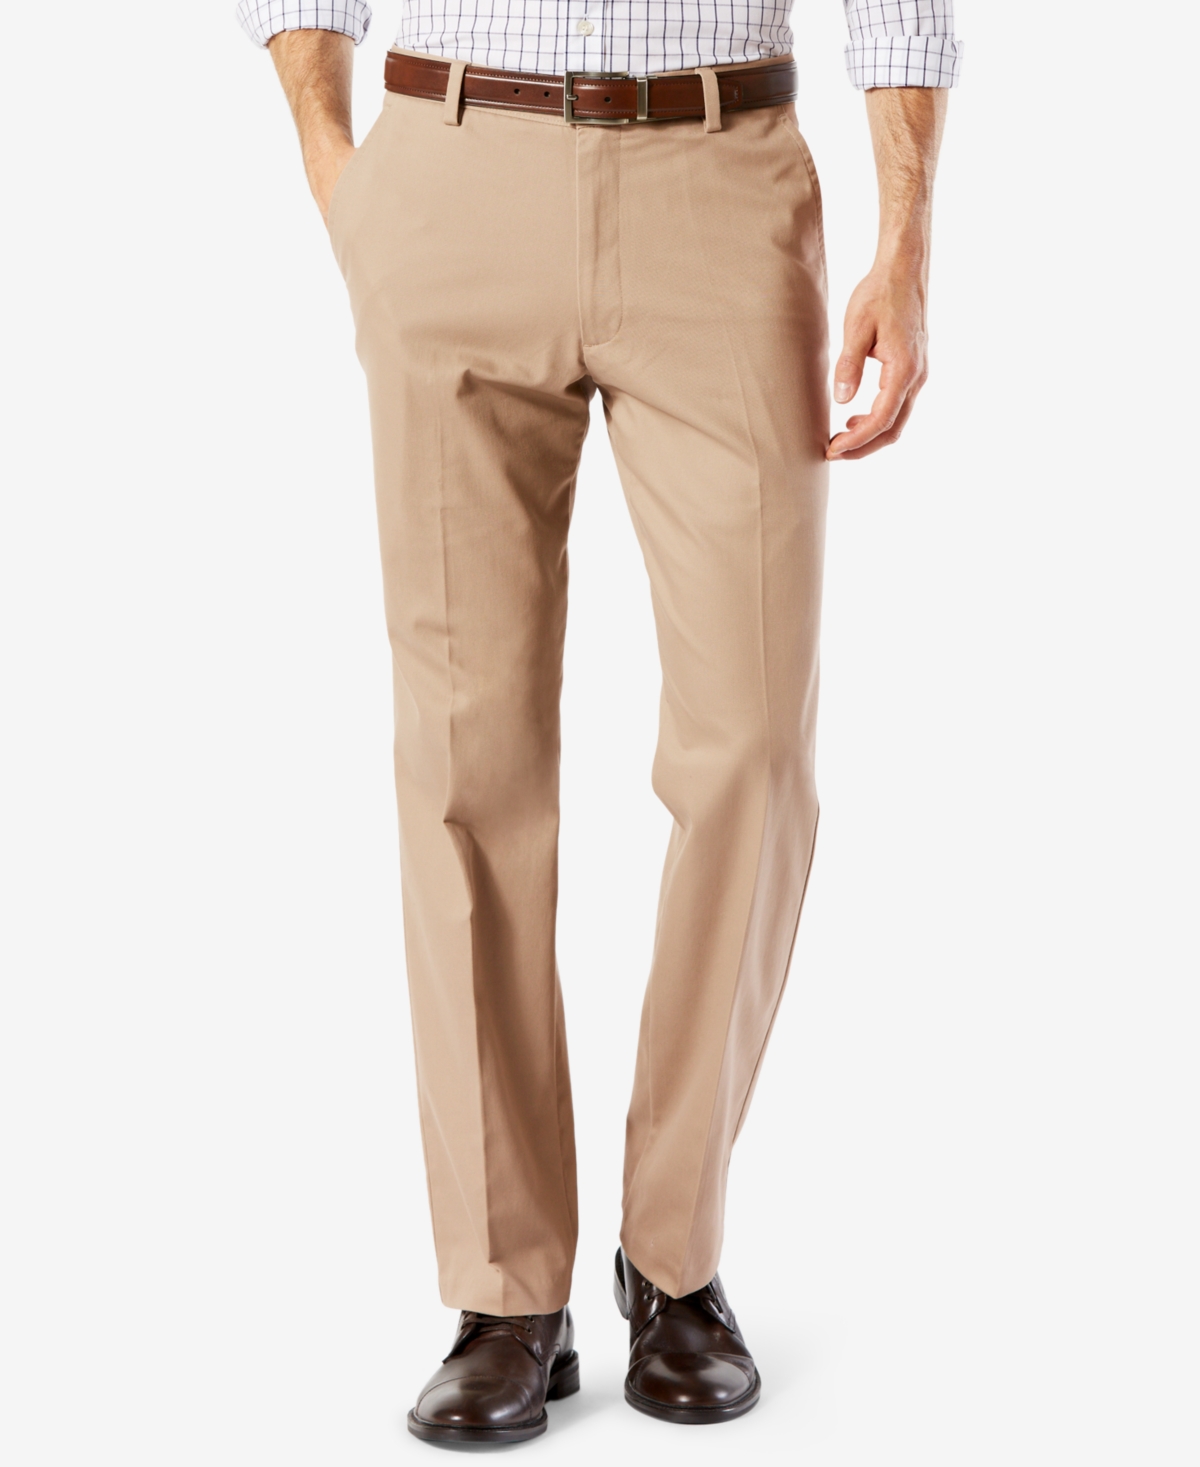 Men's Easy Straight Fit Khaki Stretch Pants - Burma Grey